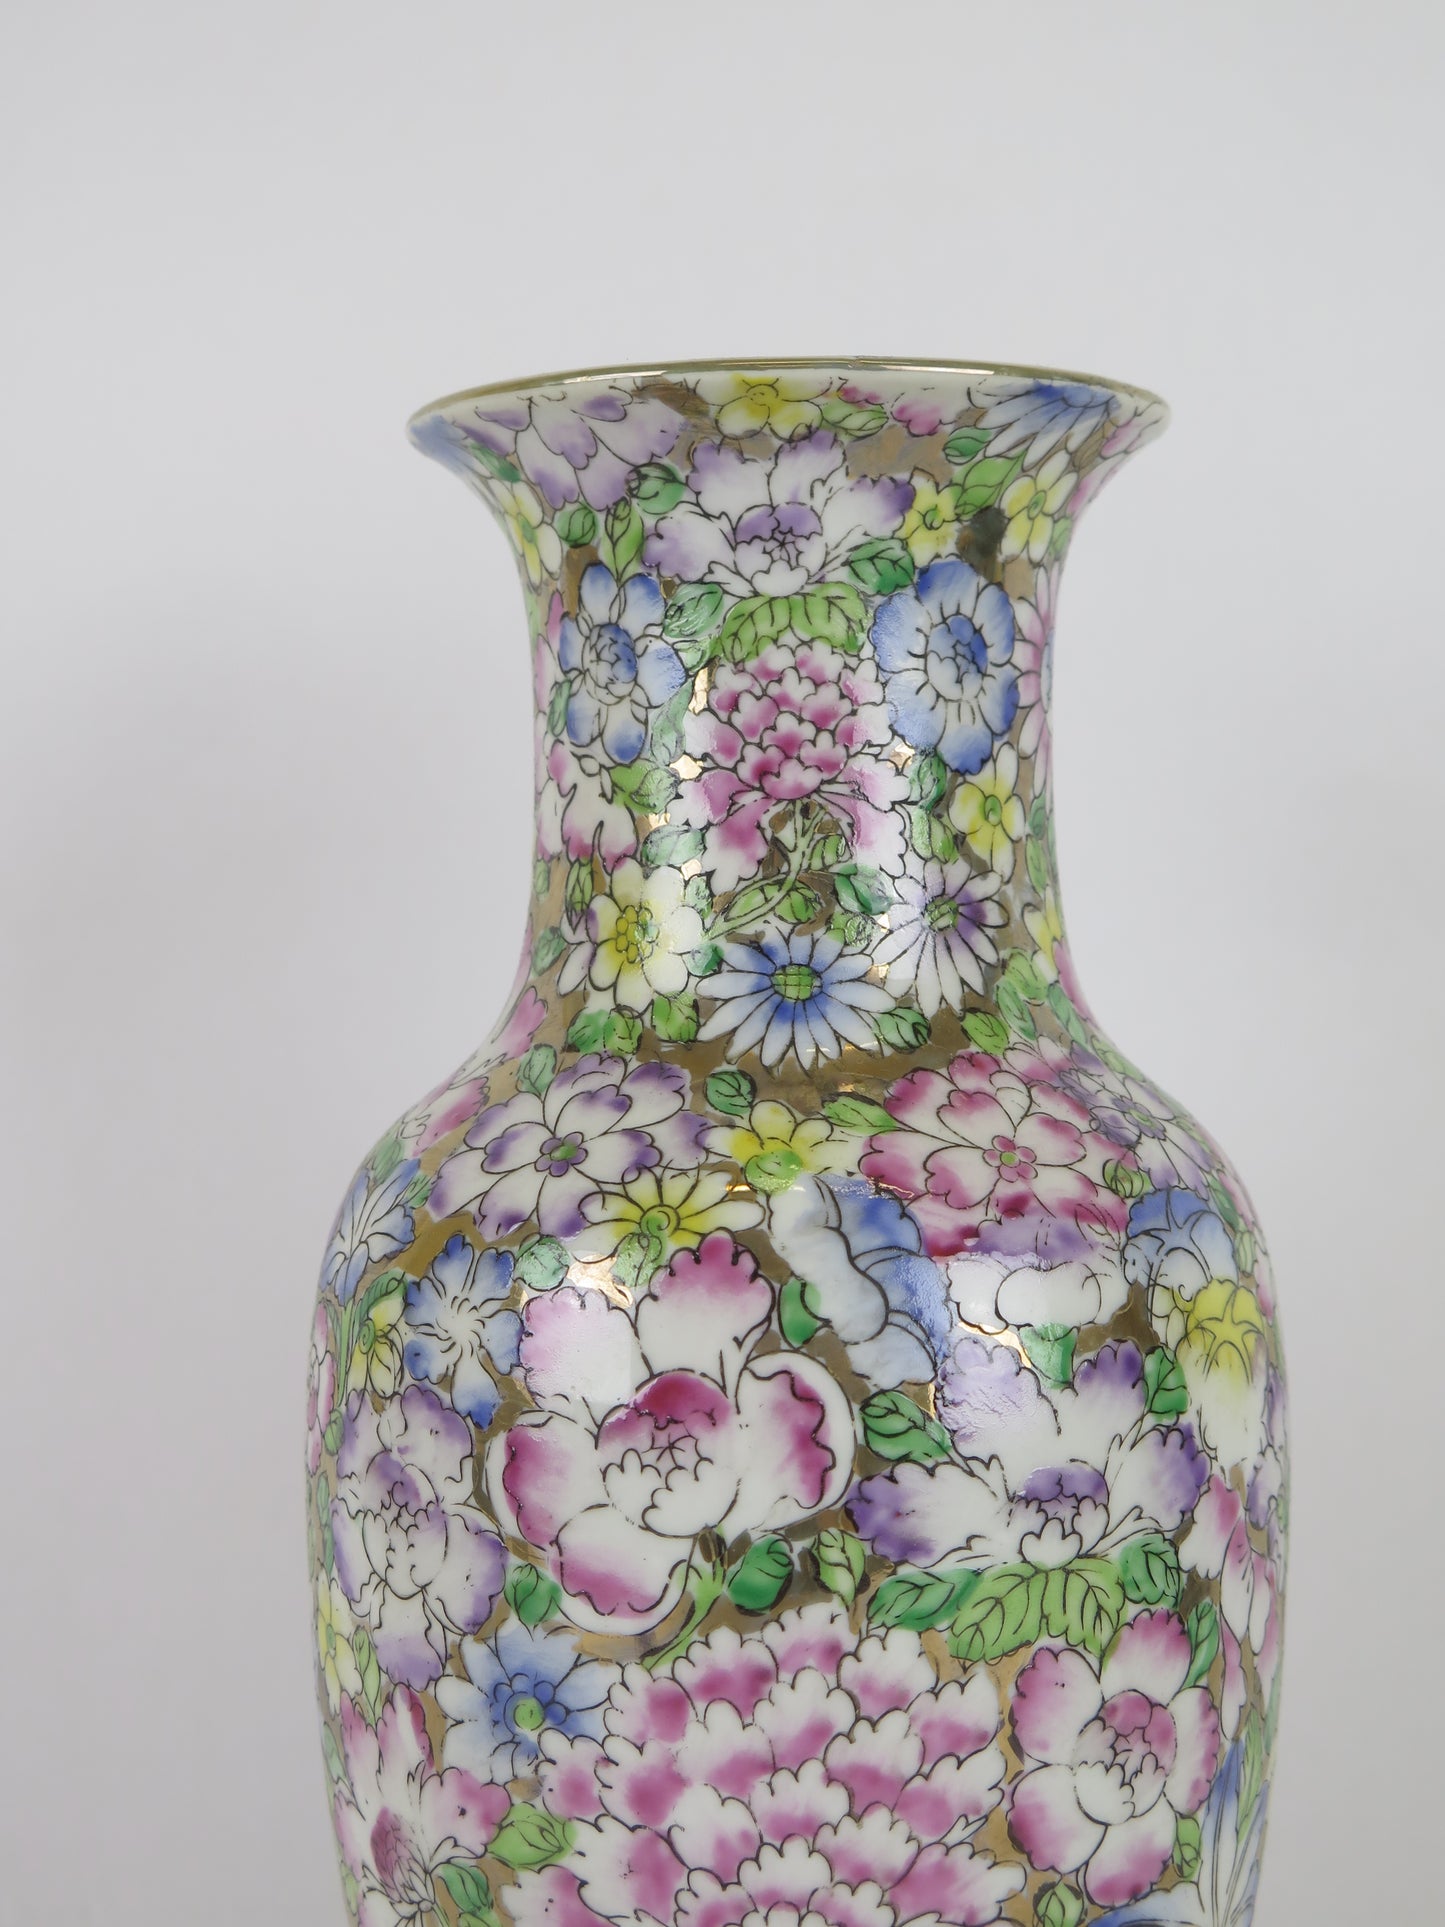 Hand painted porcelain flower vase China Asia vintage home decoration CM4 a